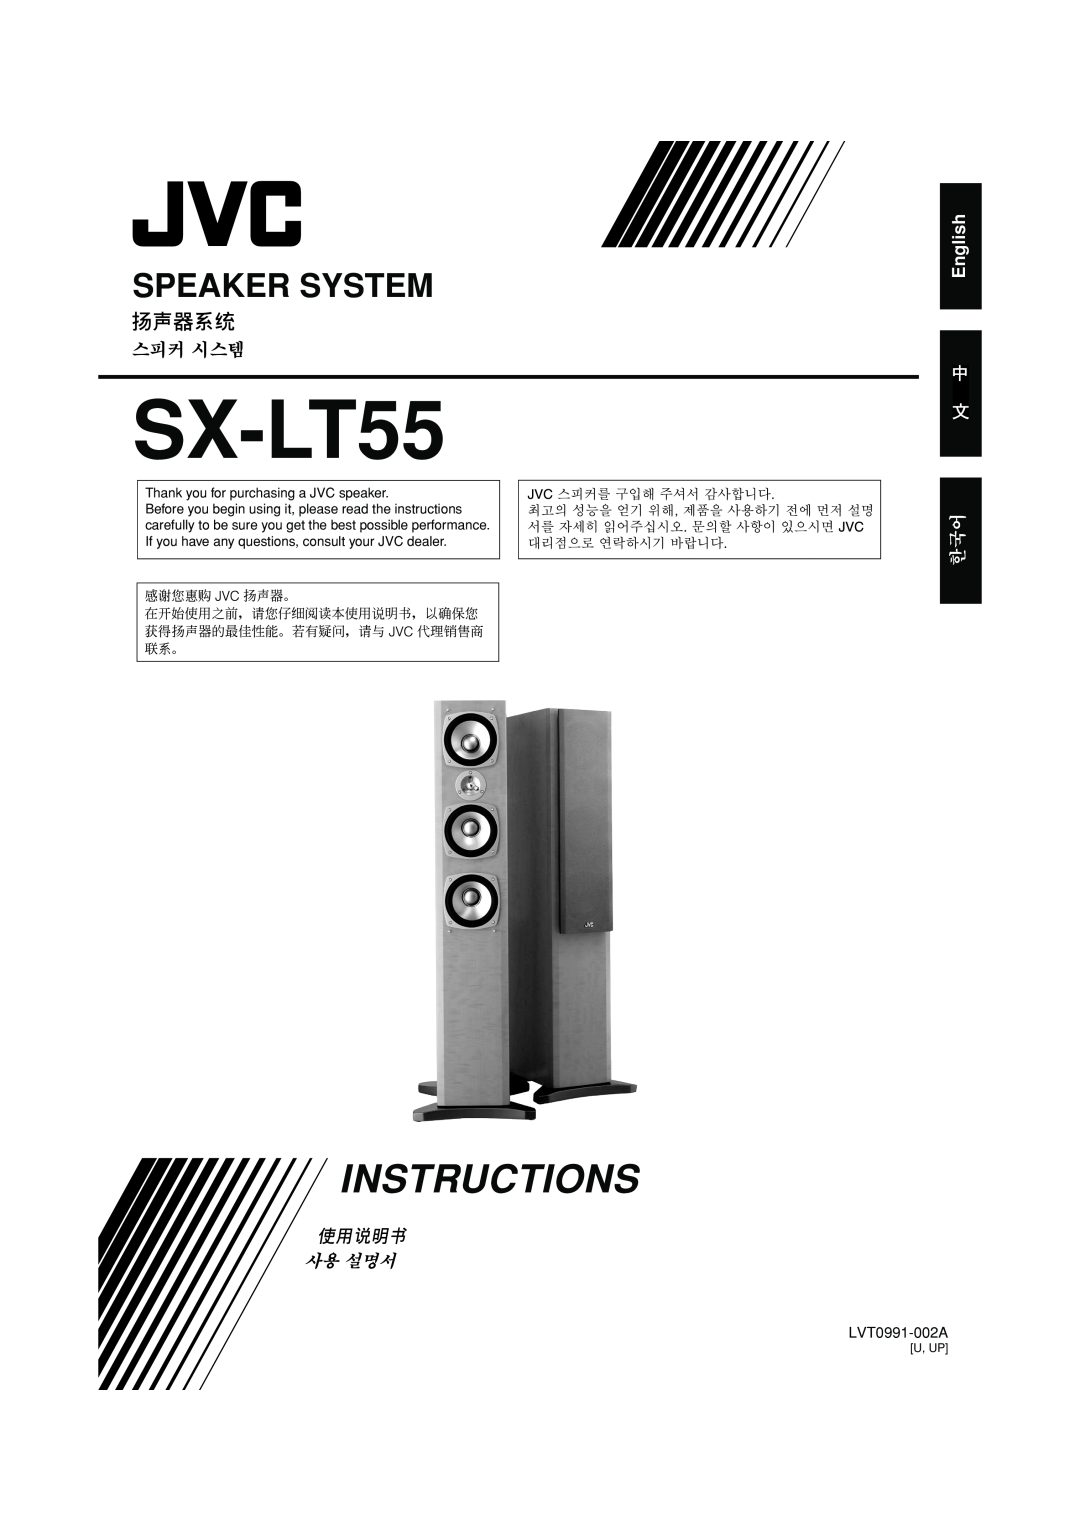 JVC SX-LT55U manual English, Instructions, Speaker System 